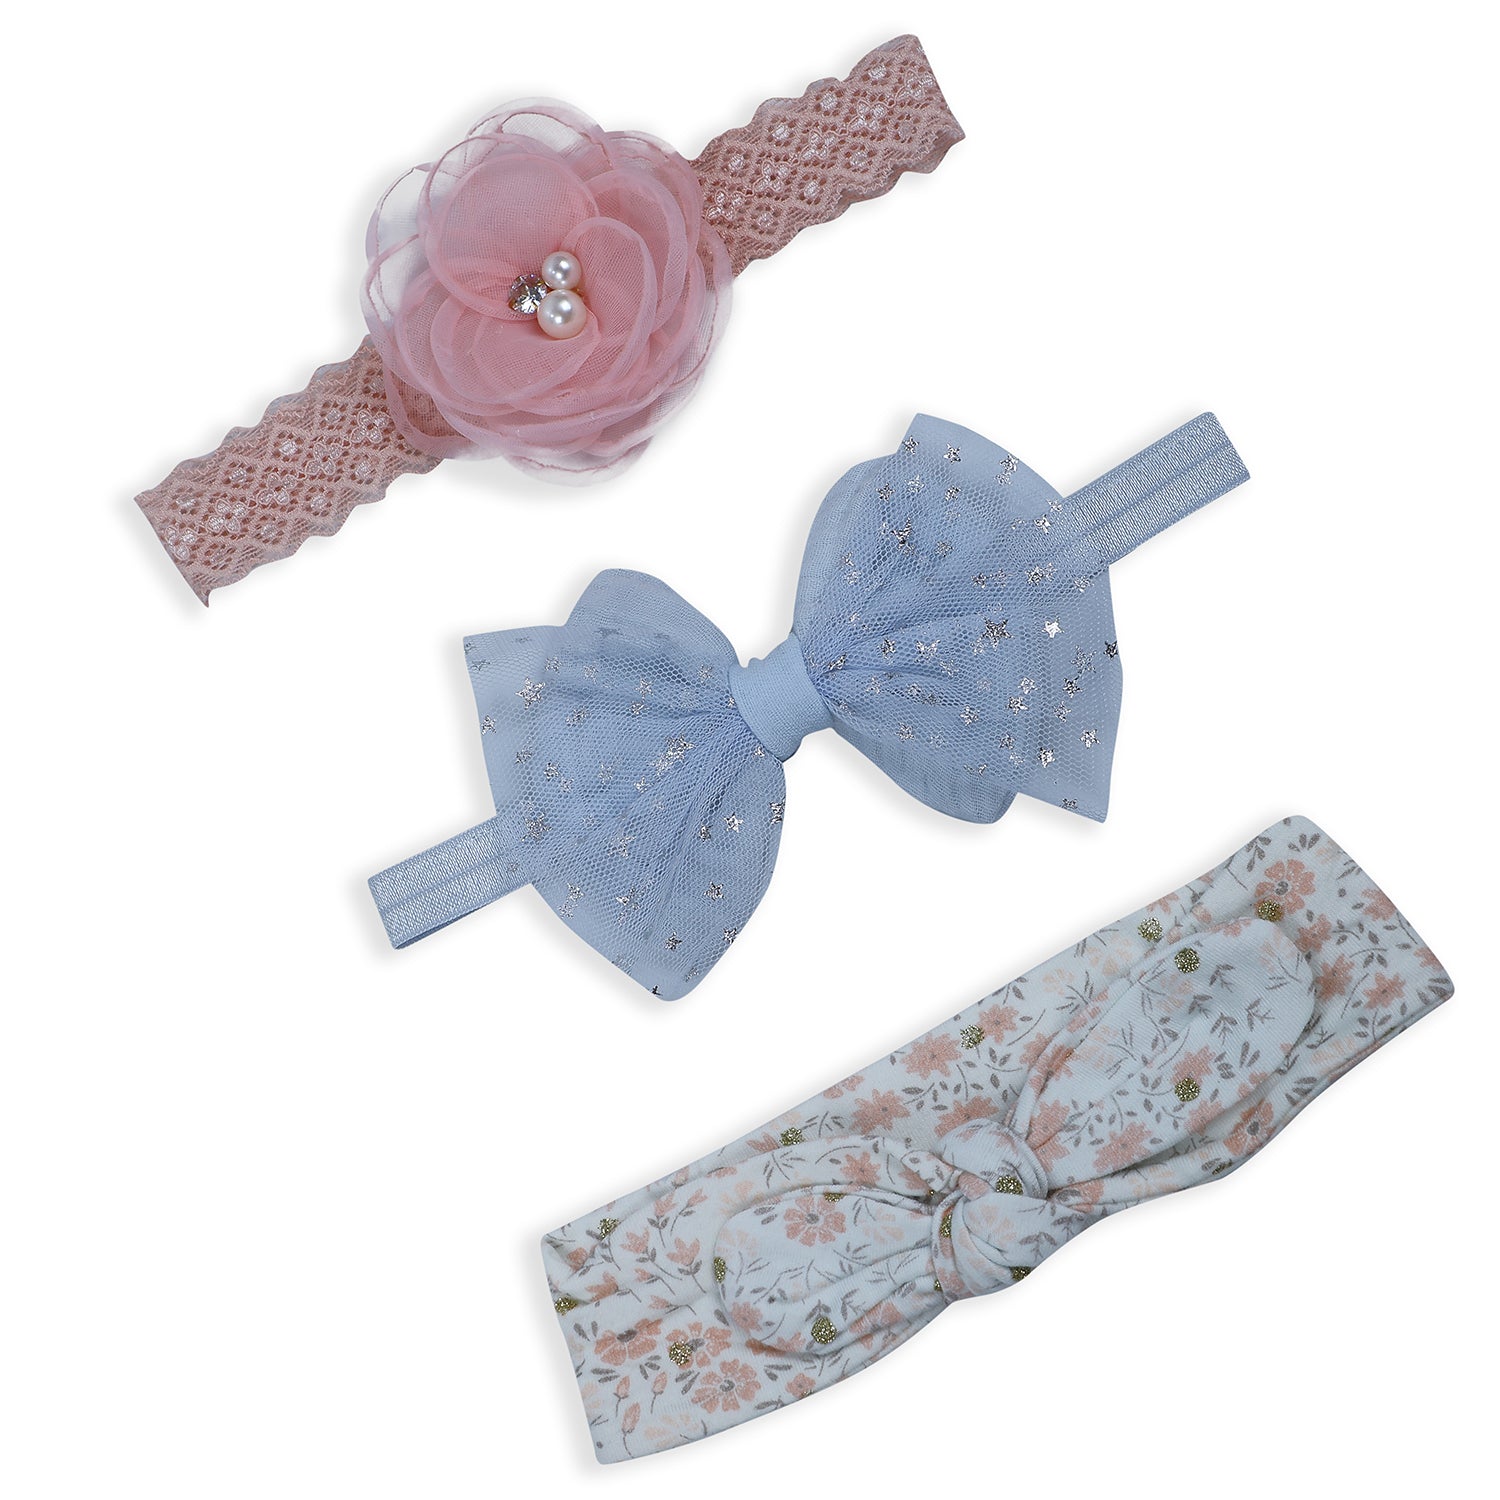 Baby Moo Emblished Flower Headband Set of 3 - Pink - Baby Moo